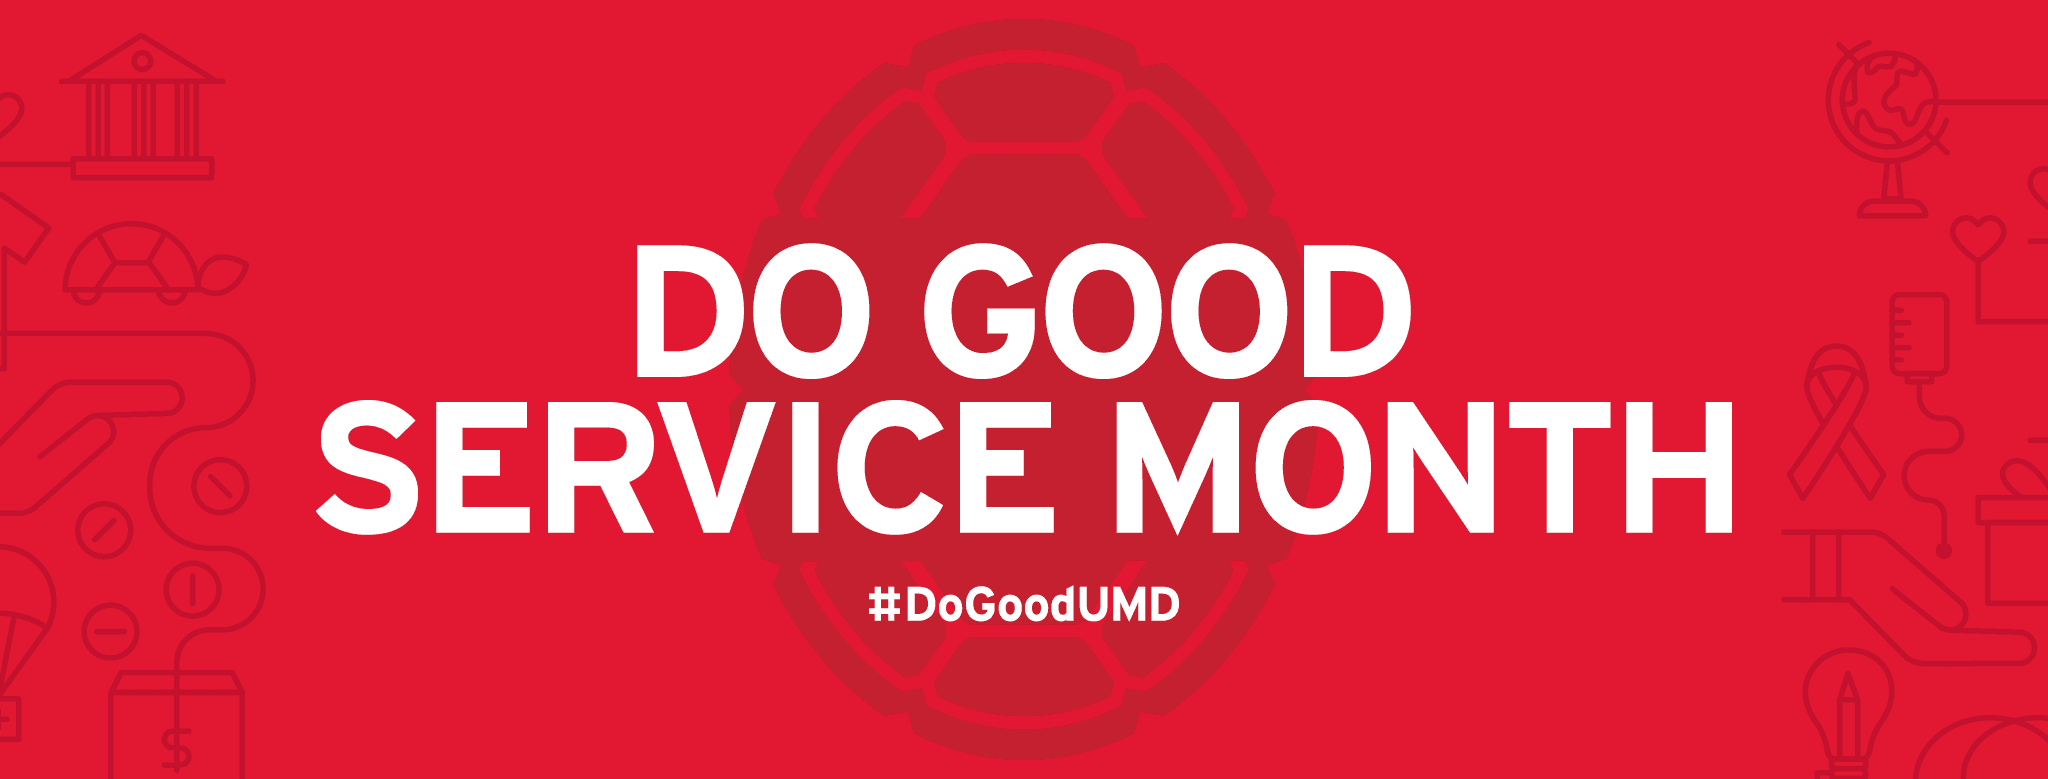 Do Good Service Month #DoGoodUMD